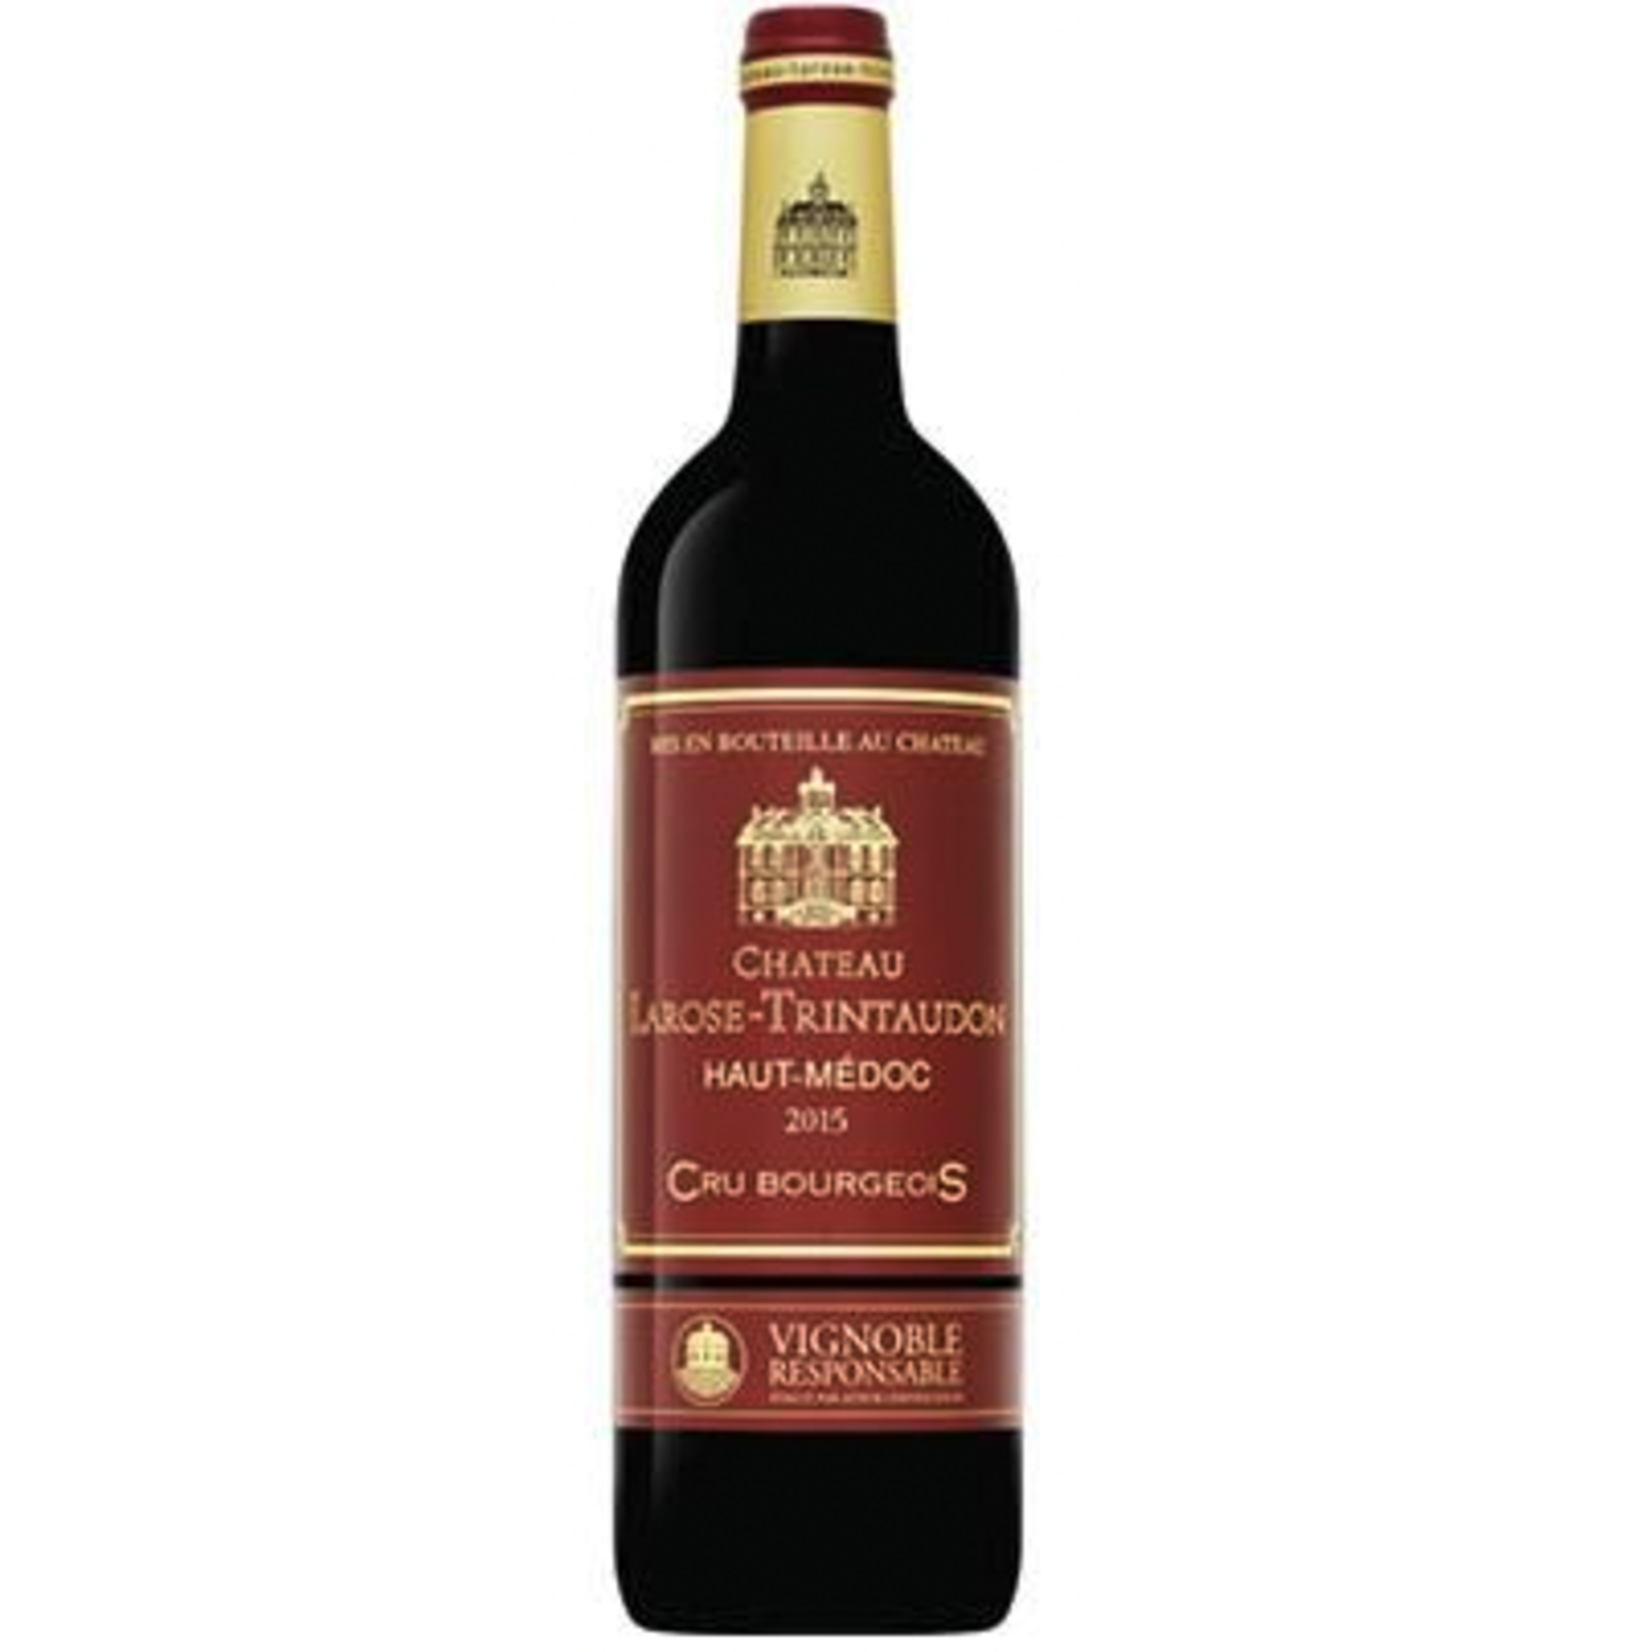 Wine Chateau Larose-Trintaudon, Haut-Medoc Cru Bourgeois 2018 375ml